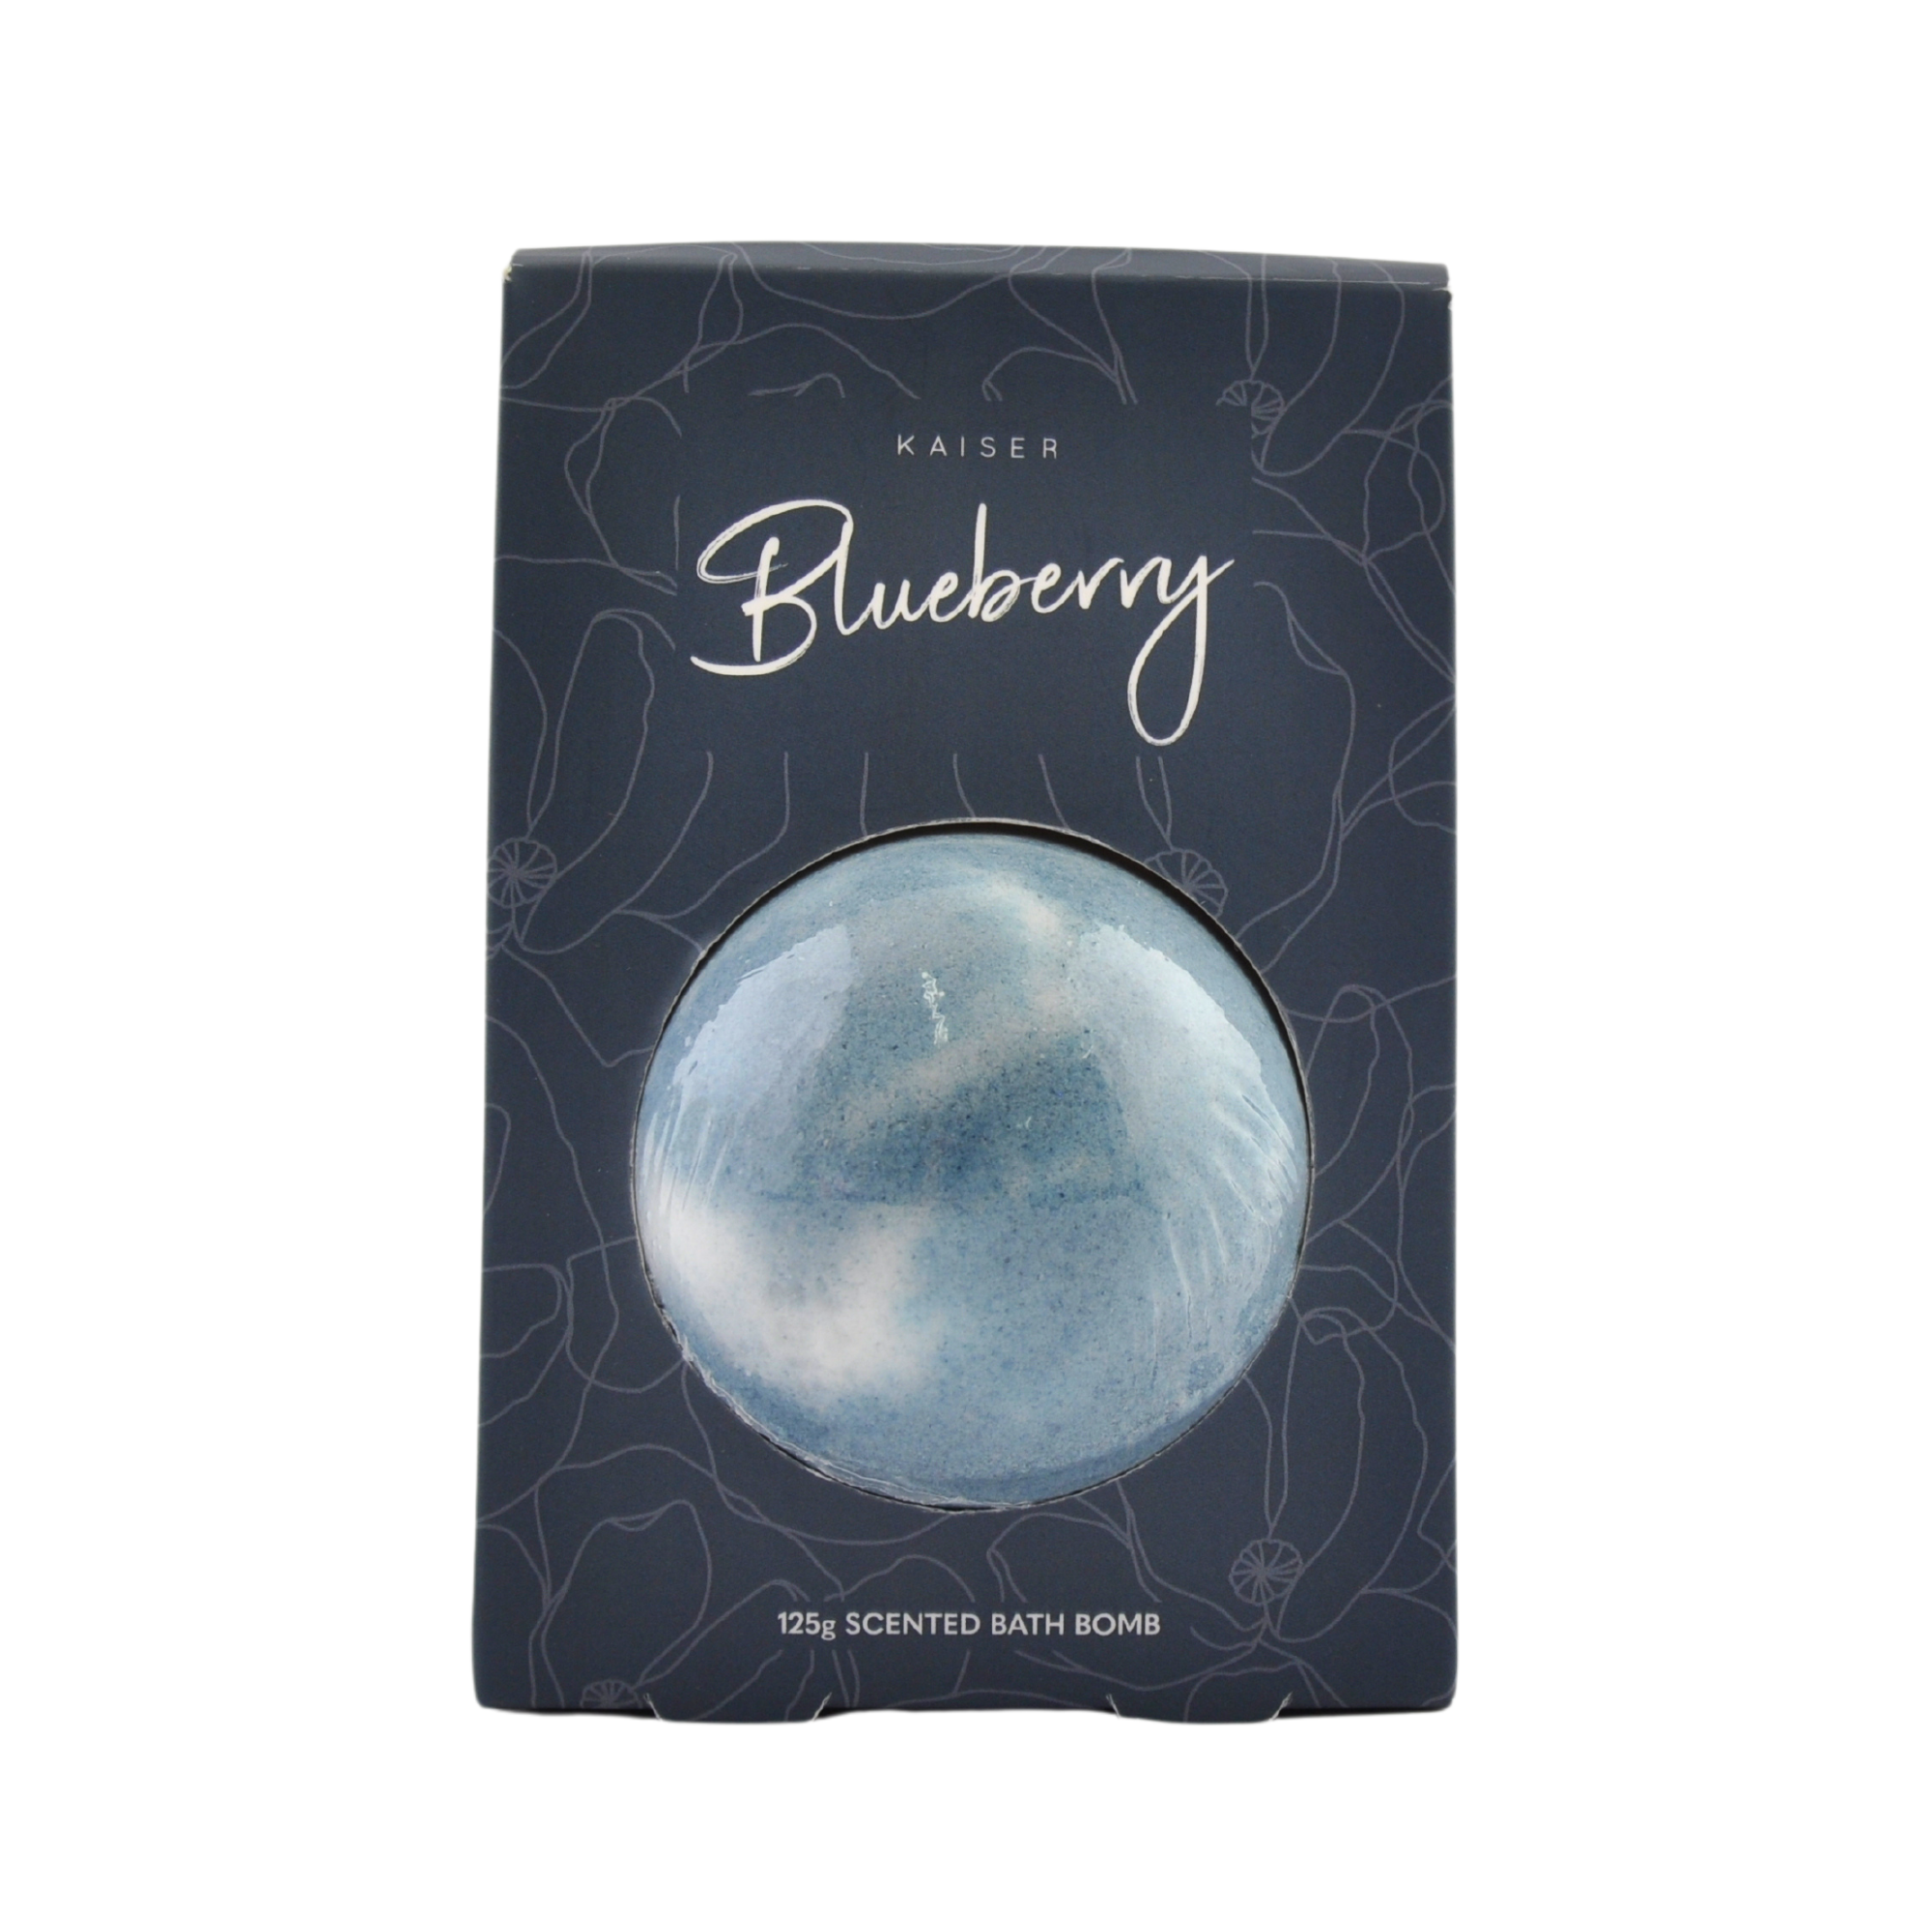 Boxed Bath Bomb - Blueberry